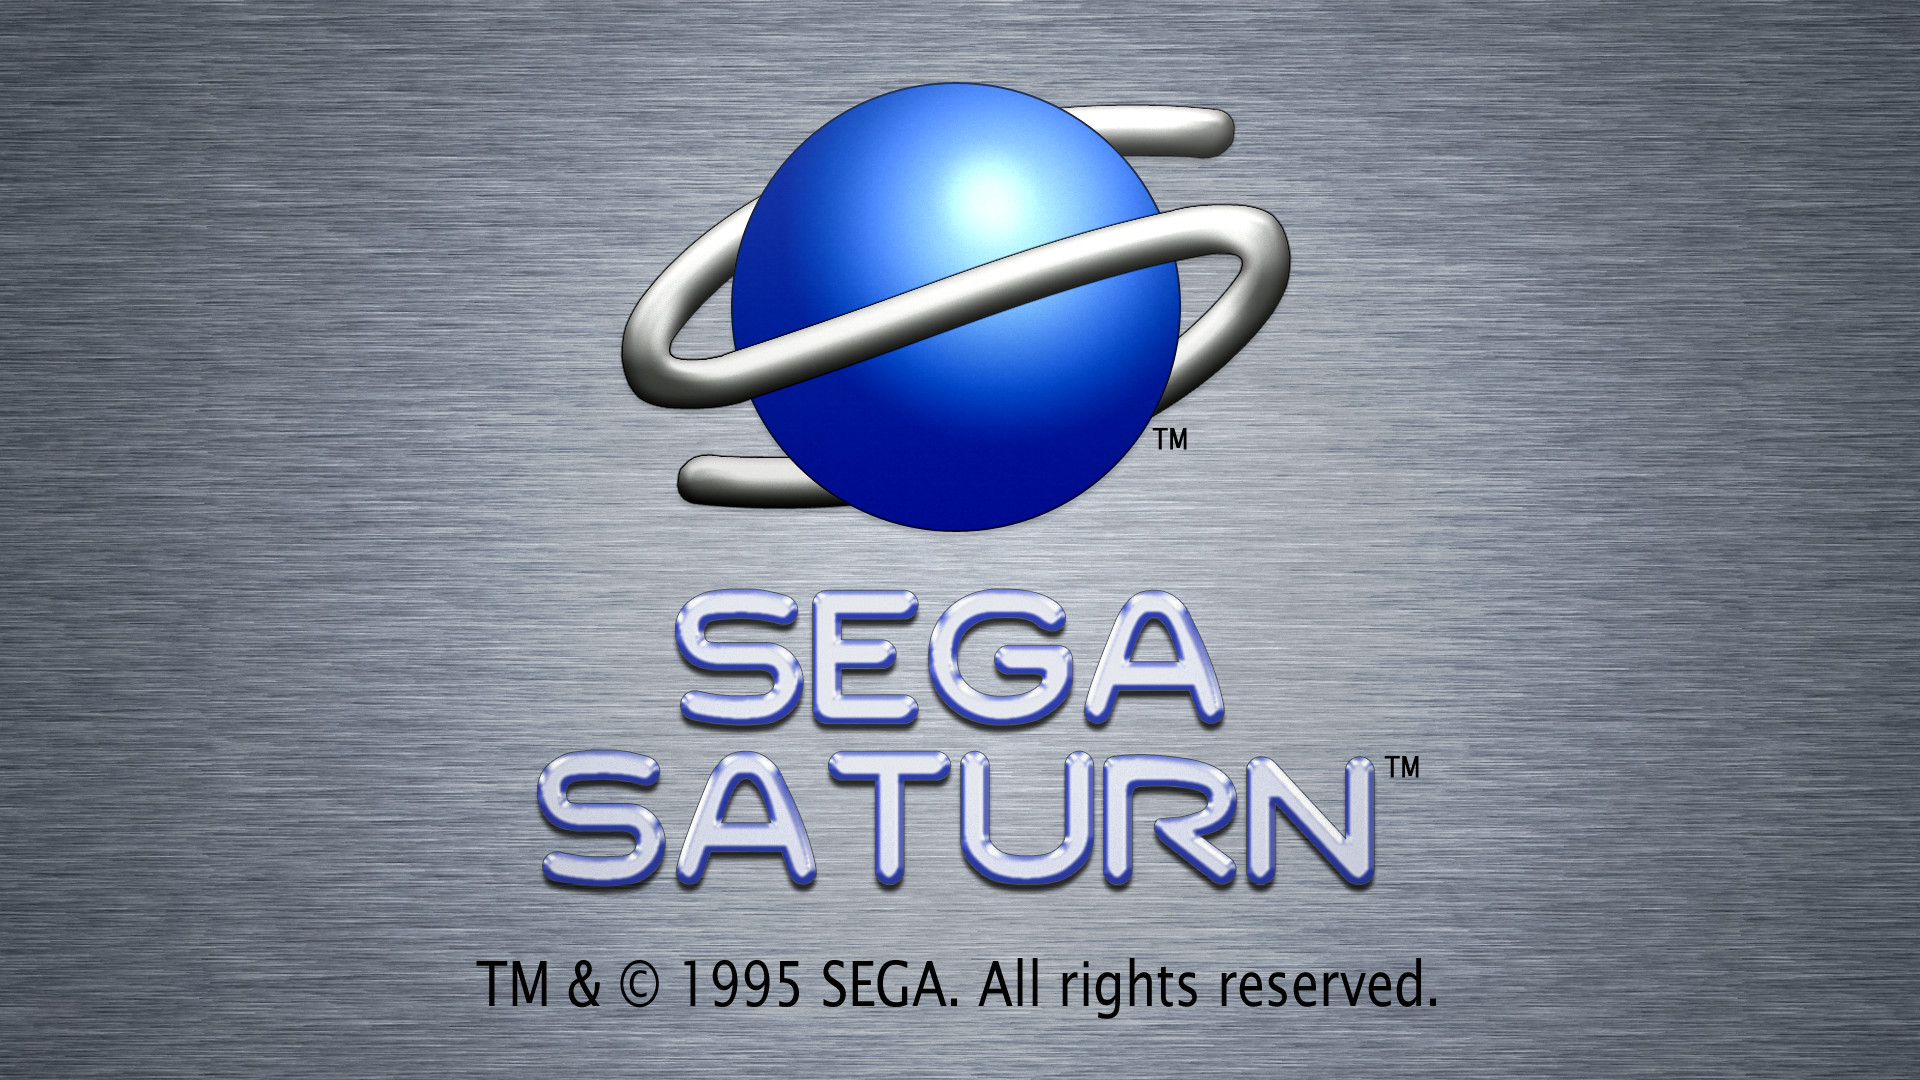 1920x1080 Sega Saturn Wallpaper by BLUEamnesiac Sega Saturn Wallpaper by BLUEamnesiac